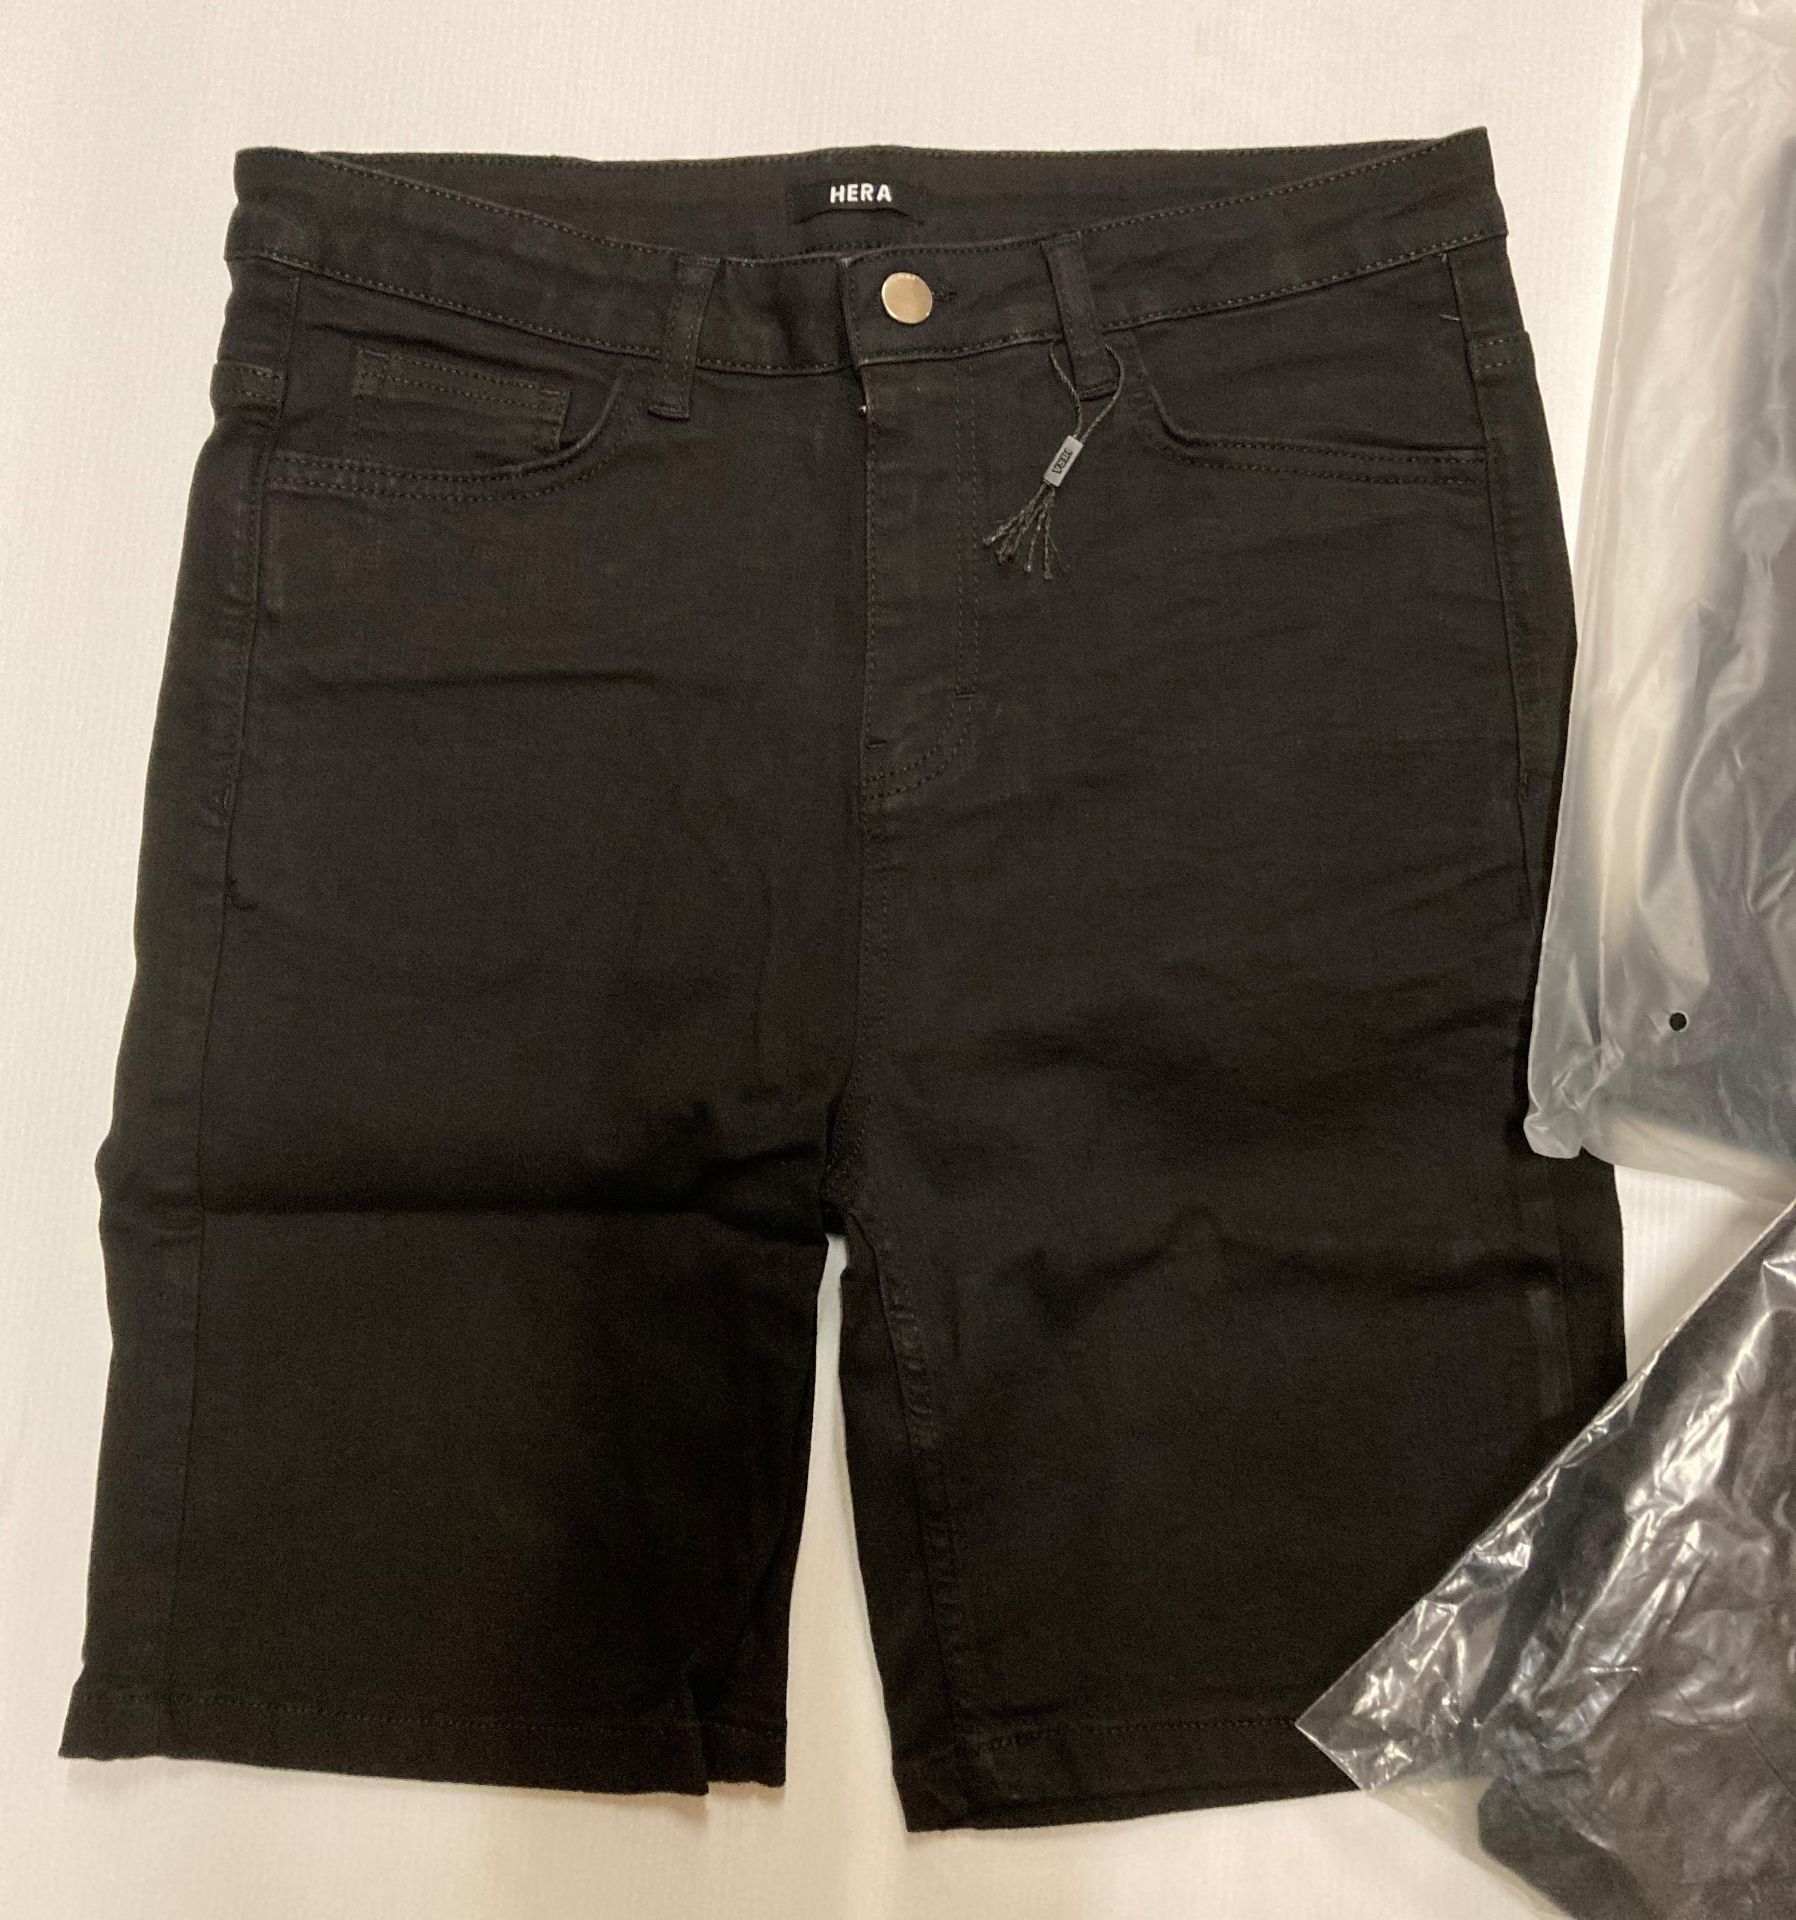 4 x items - 2 x Hera black denim shorts (size 32) and 2 x Hera slim fit black denim shorts with - Image 2 of 3